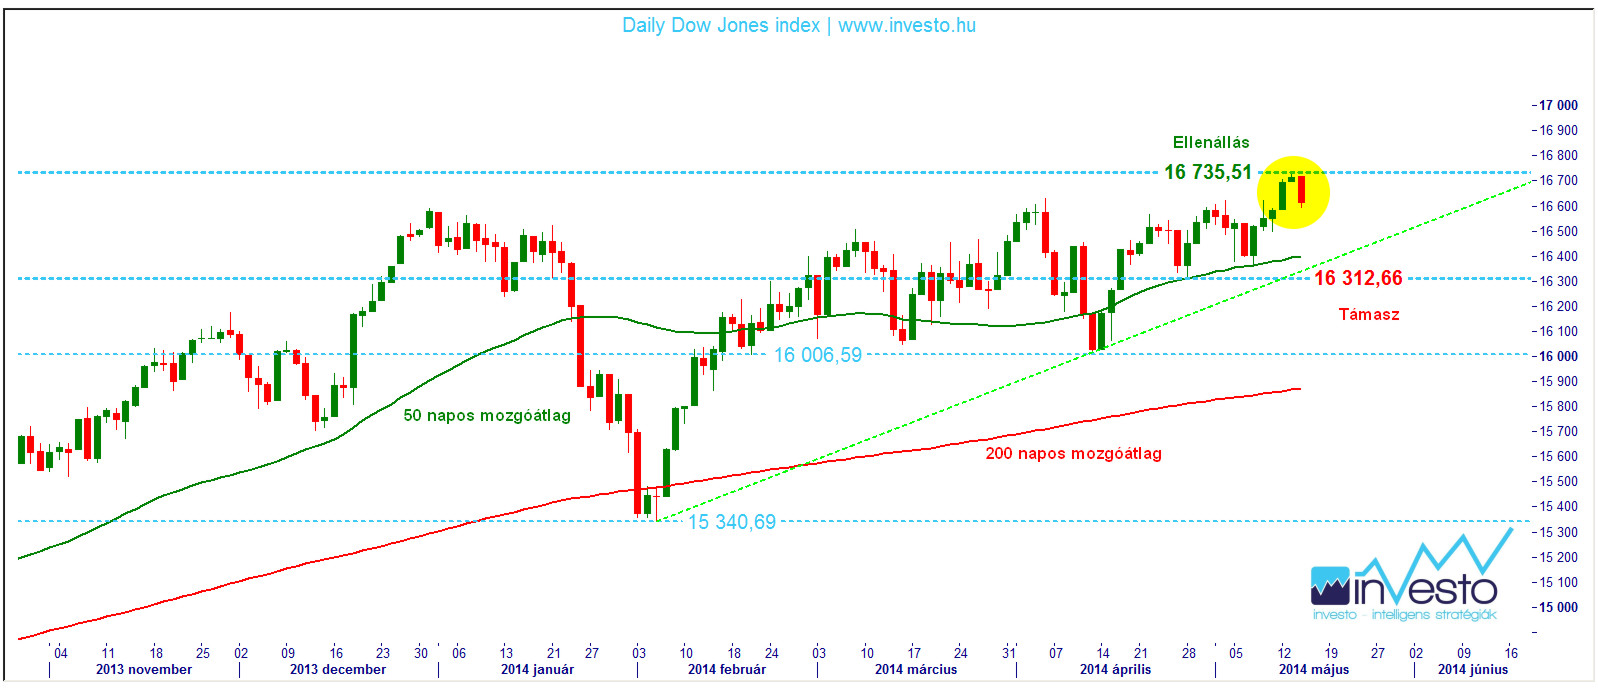 Dow Jones index daily 14.05.15.jpg